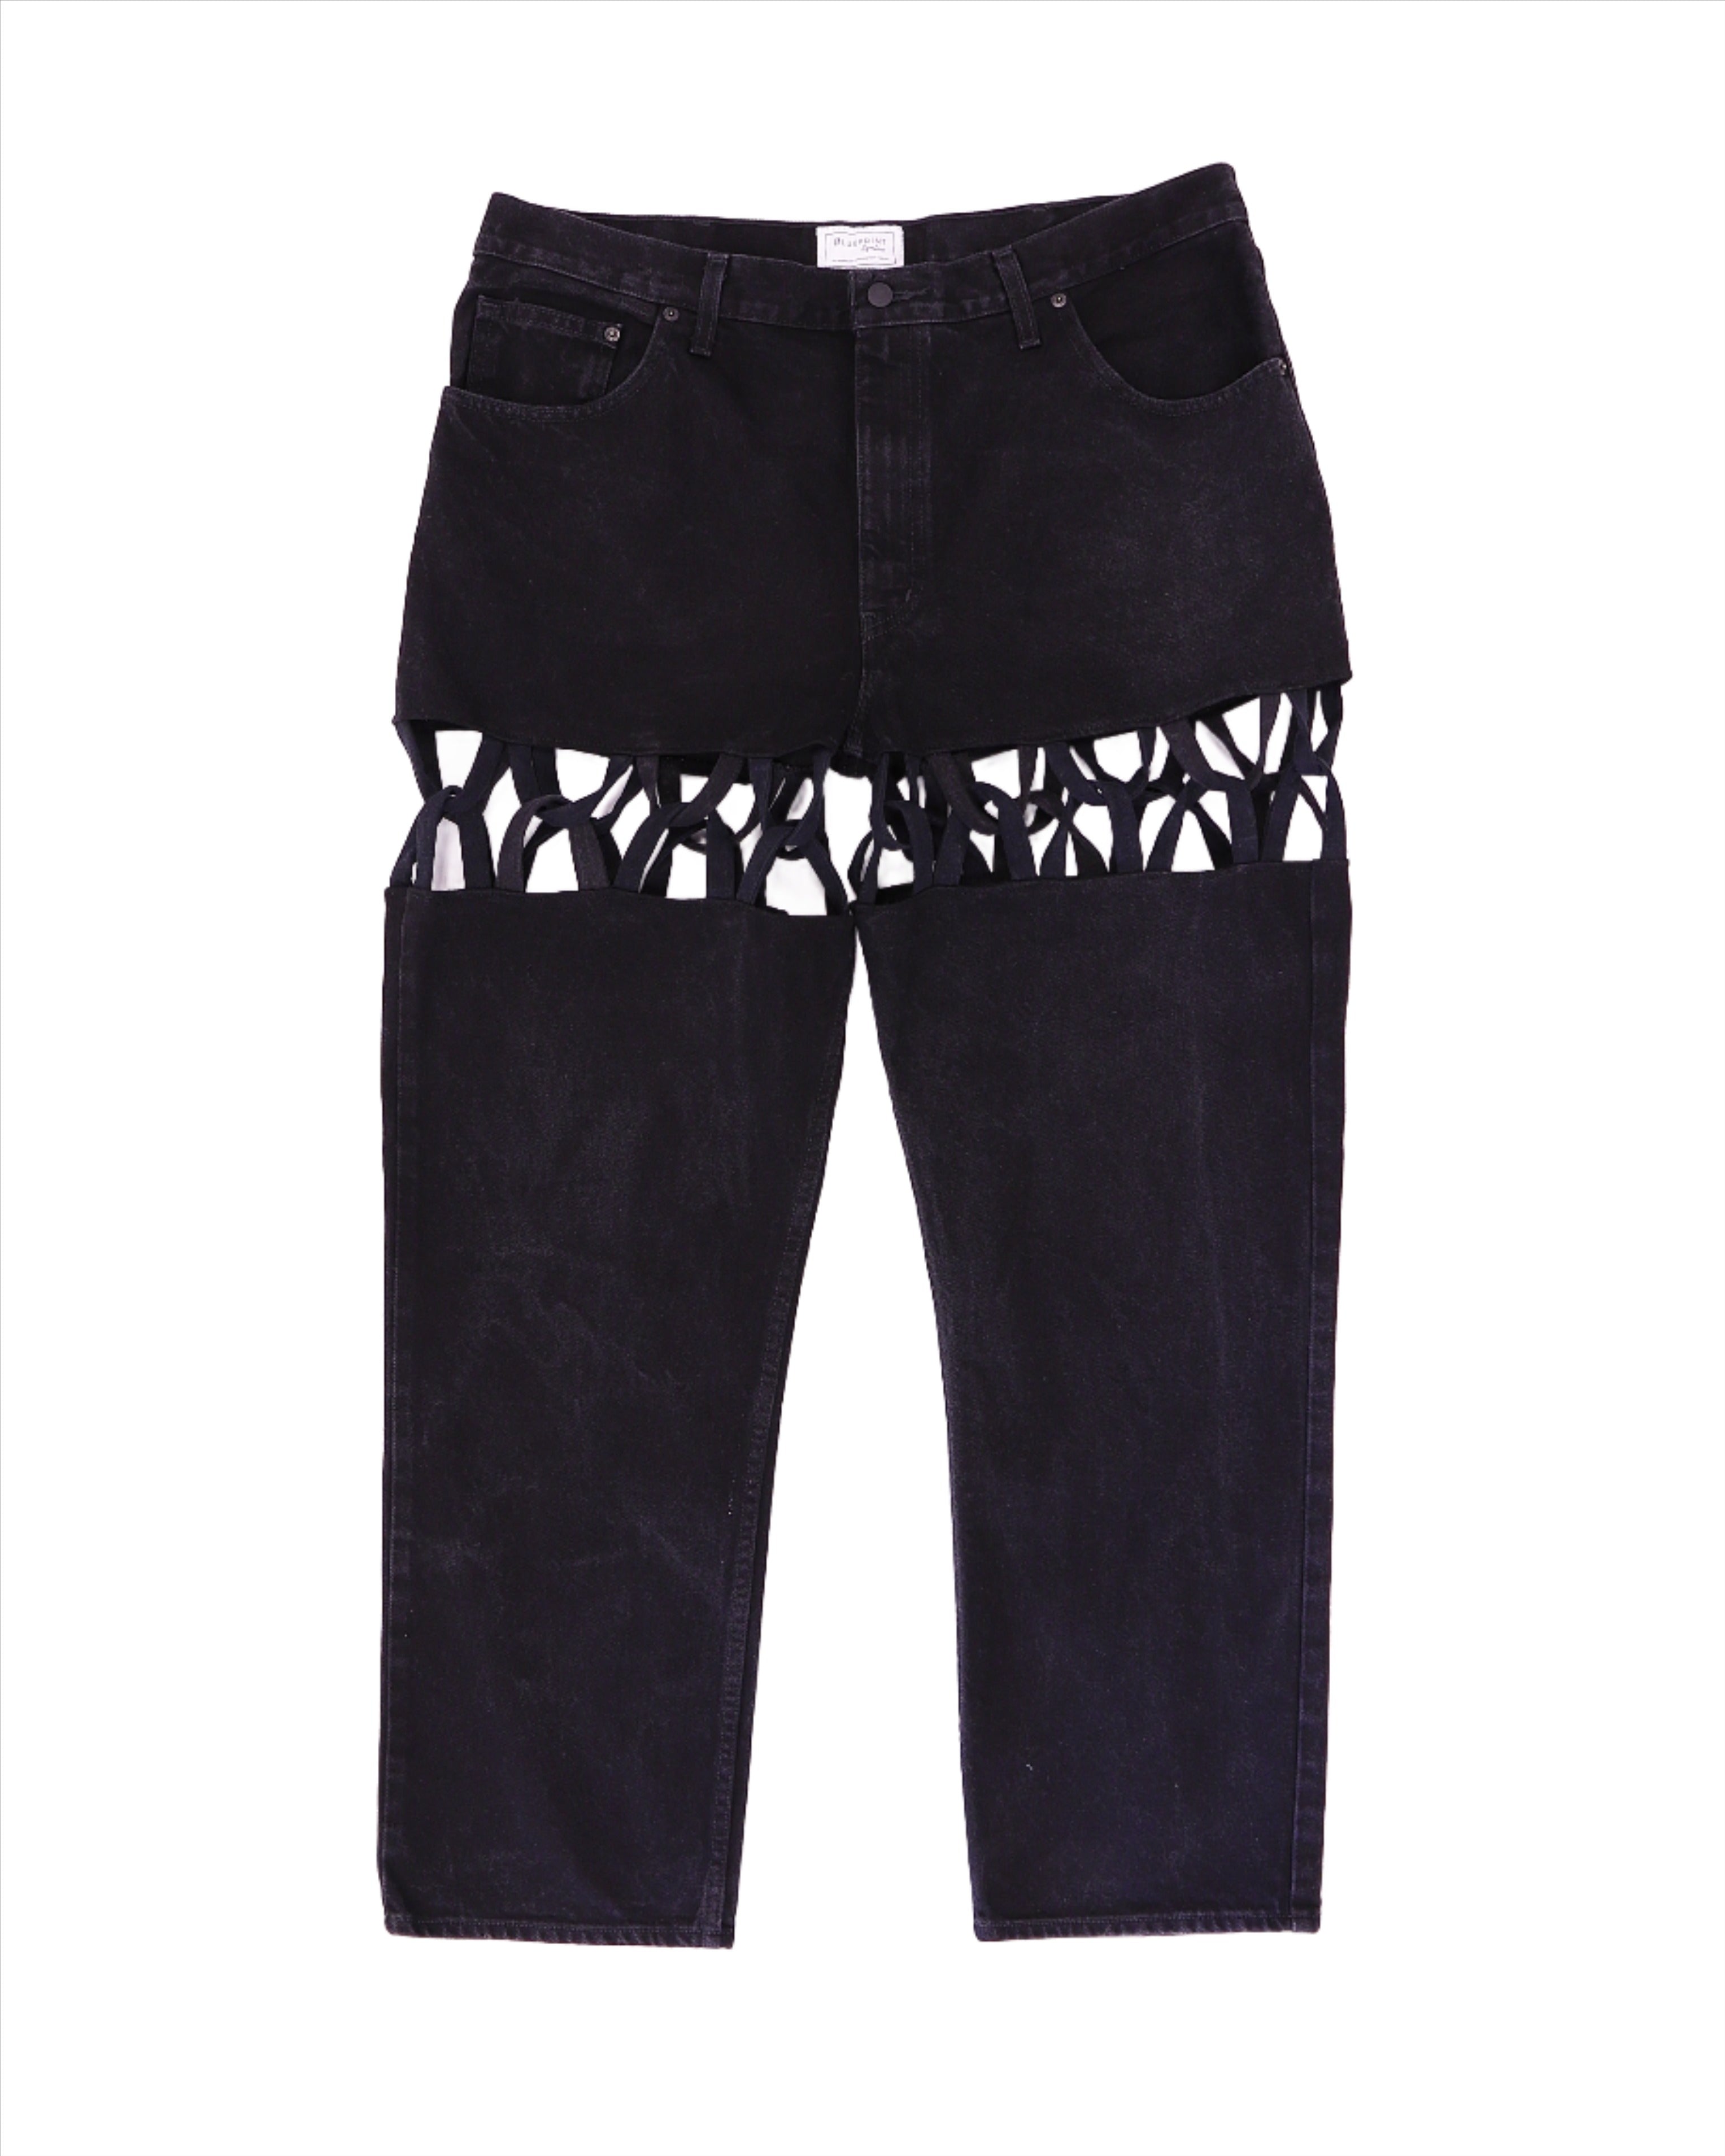 Criss Cross Jeans Black (size 20)